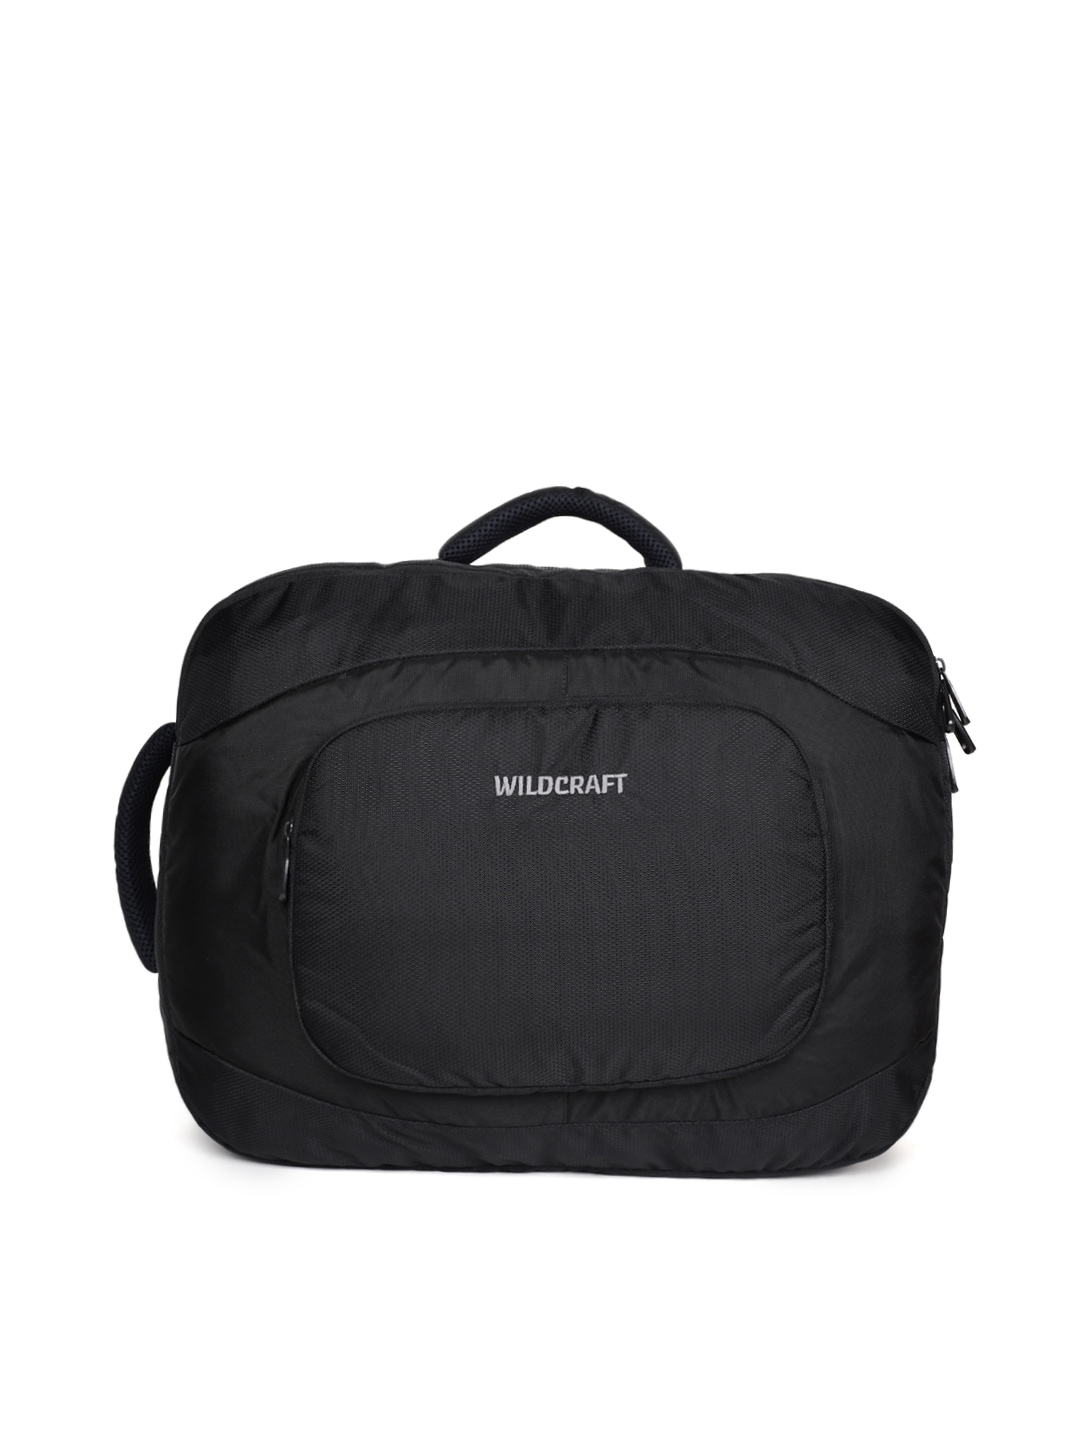 Wildcraft Unisex Black Solid Laptop Bag